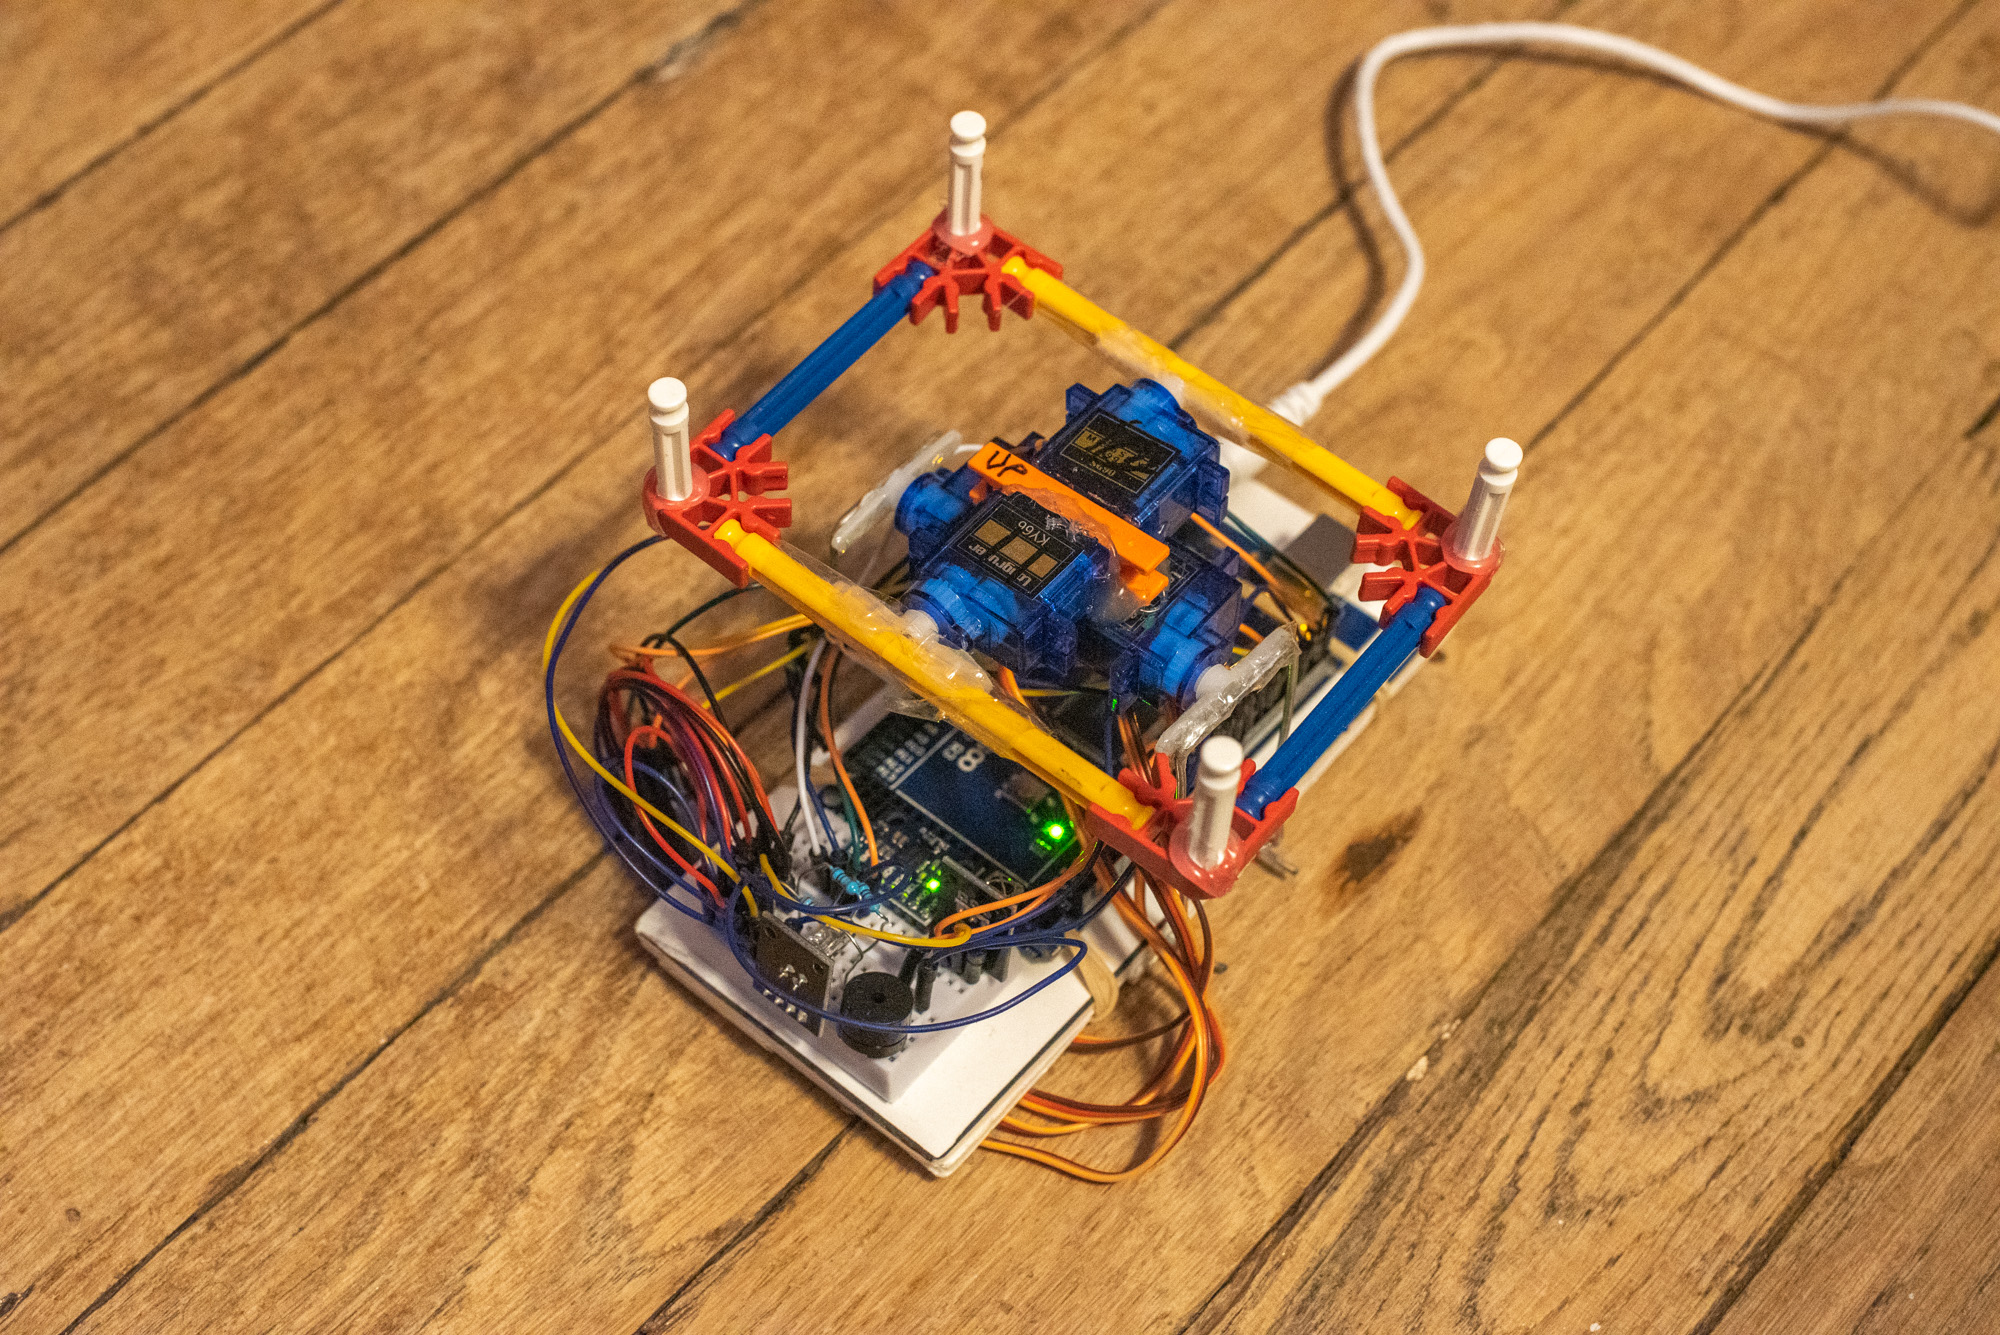 I made an unusual non-spill cup holder - Robotics - Arduino Forum